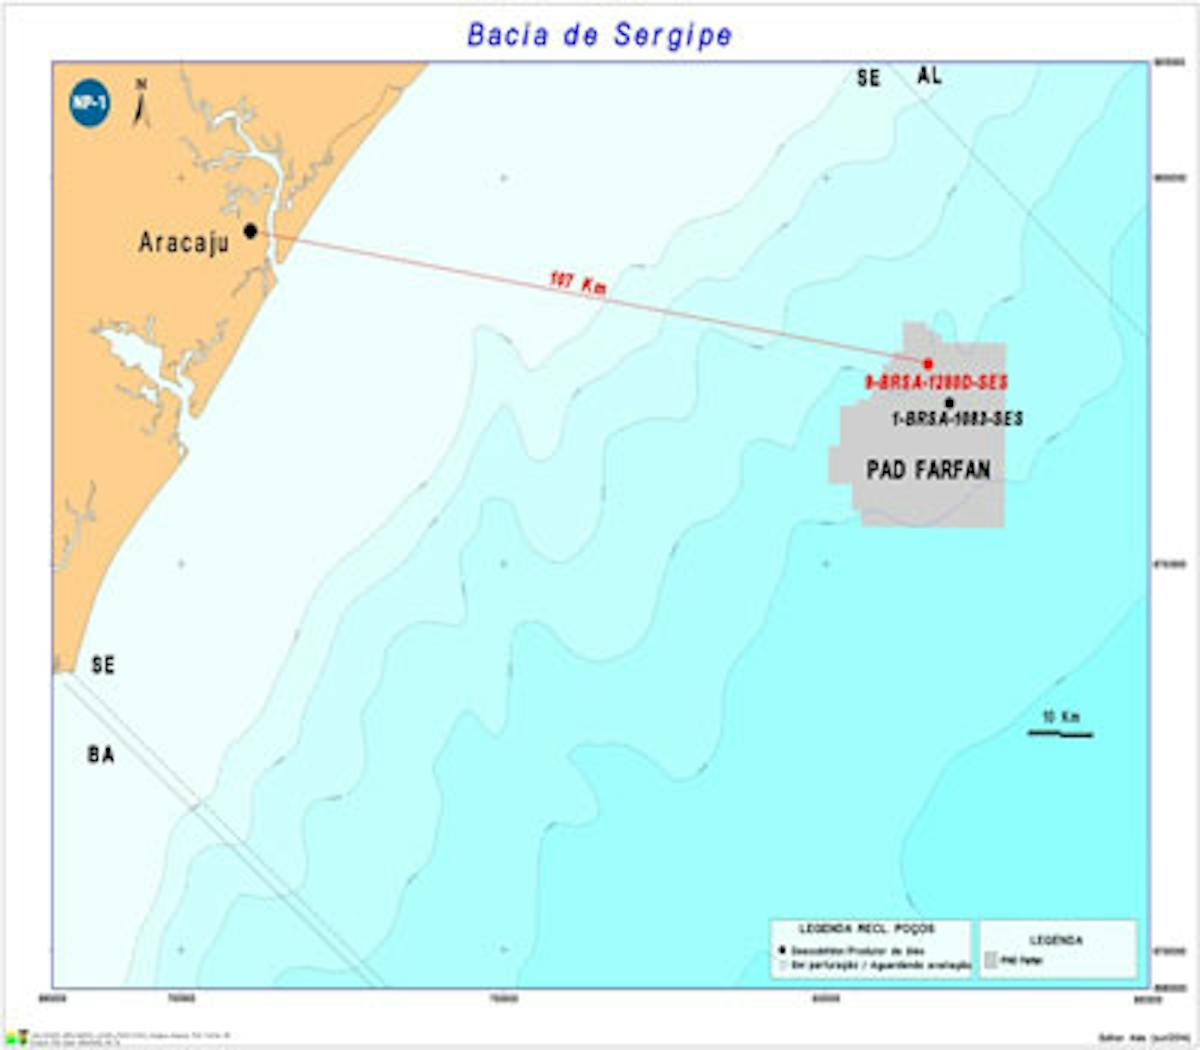 Fanfan area in the Sergipe-Alagoas basin offshore Brazil